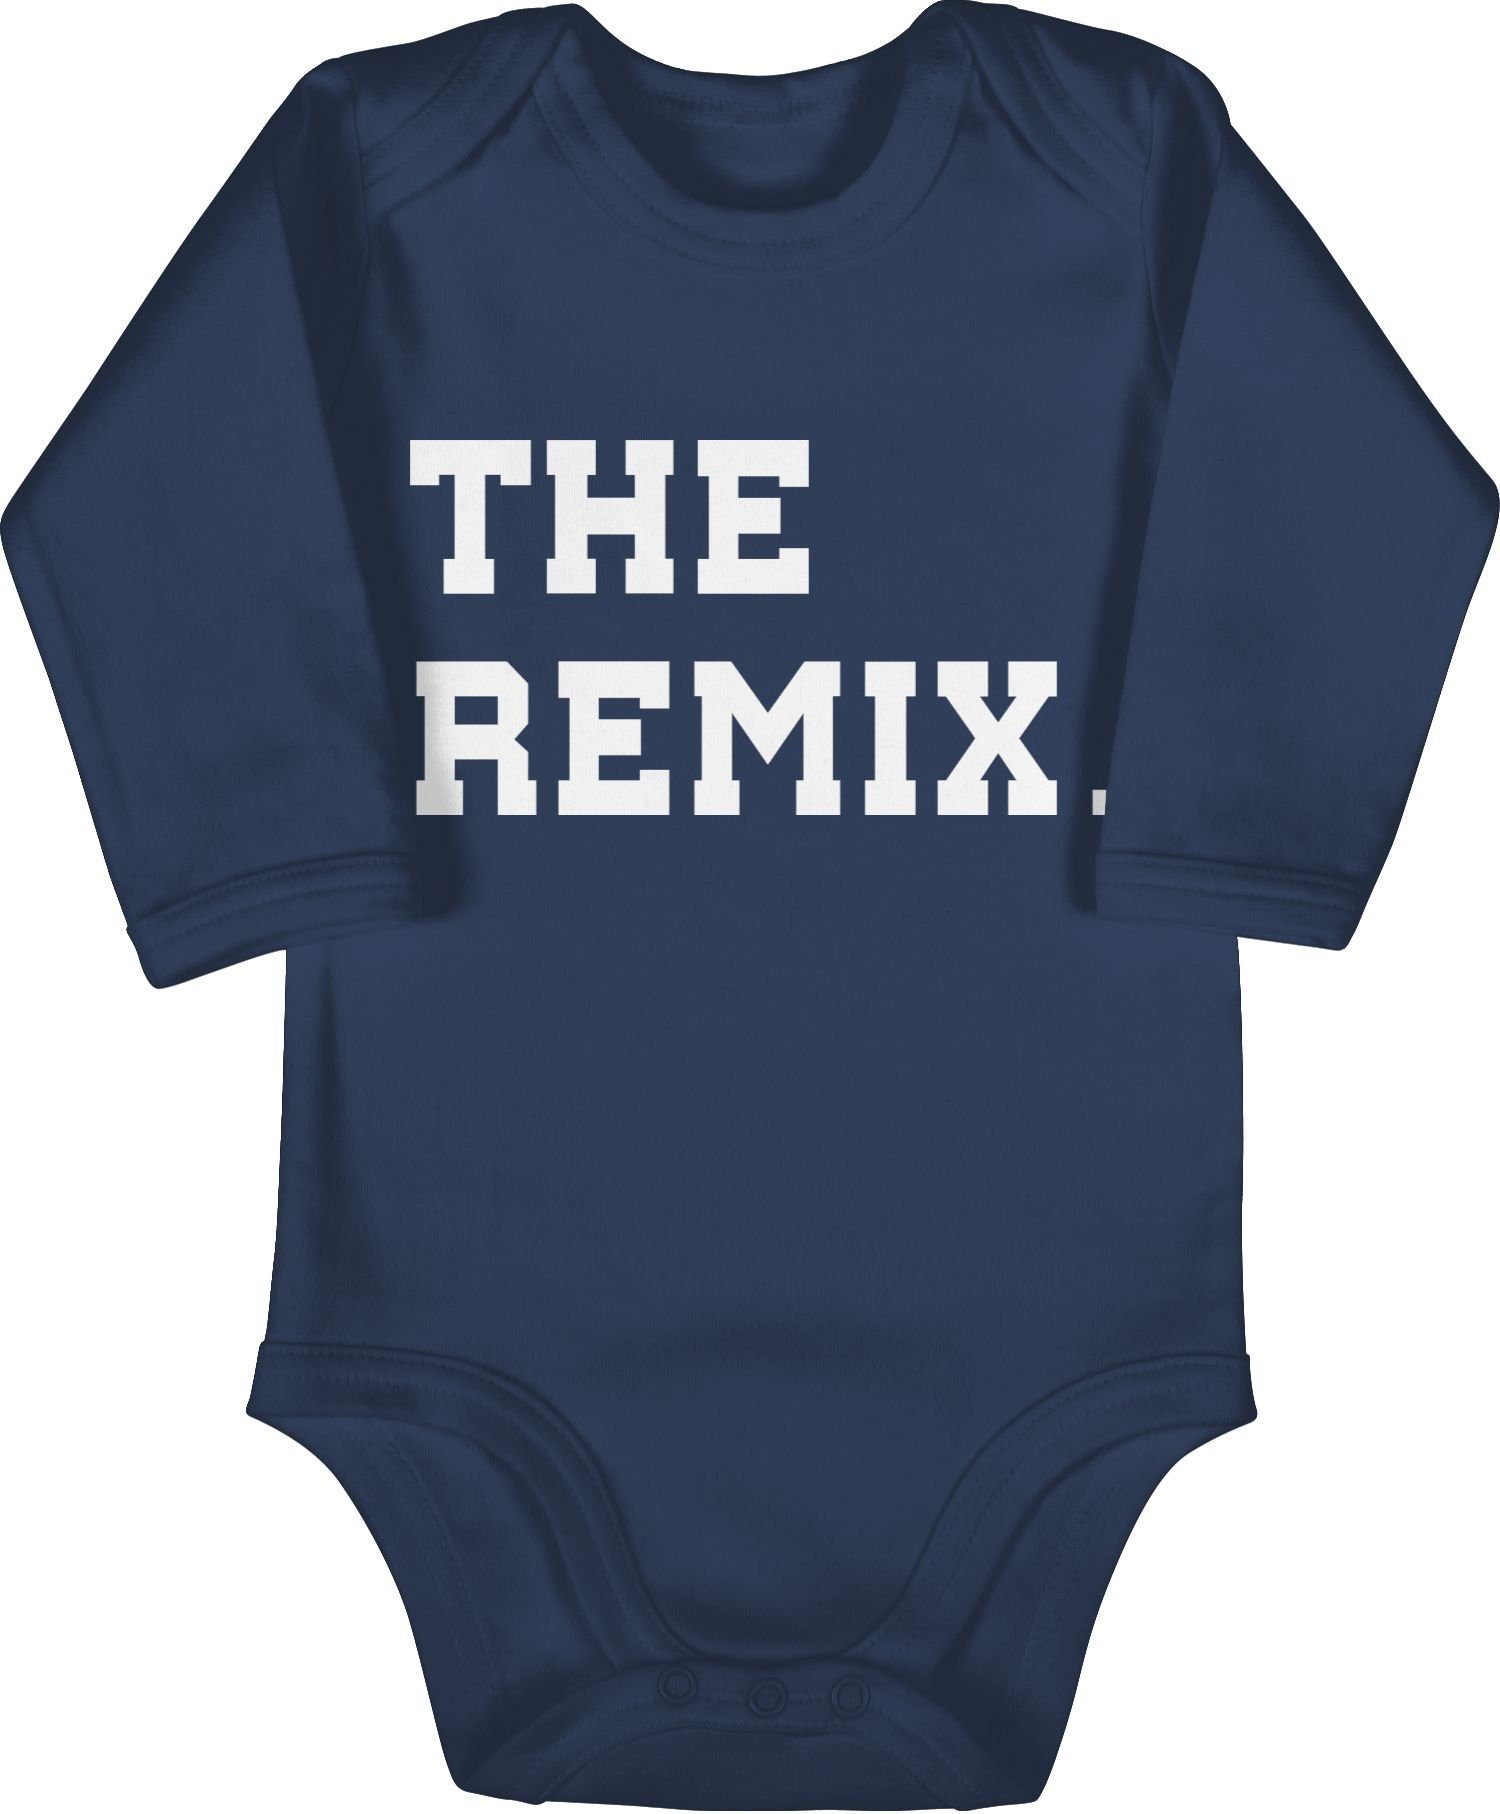 Shirtracer Shirtbody The Original The Remix Kind Partner-Look Familie Baby 2 Navy Blau